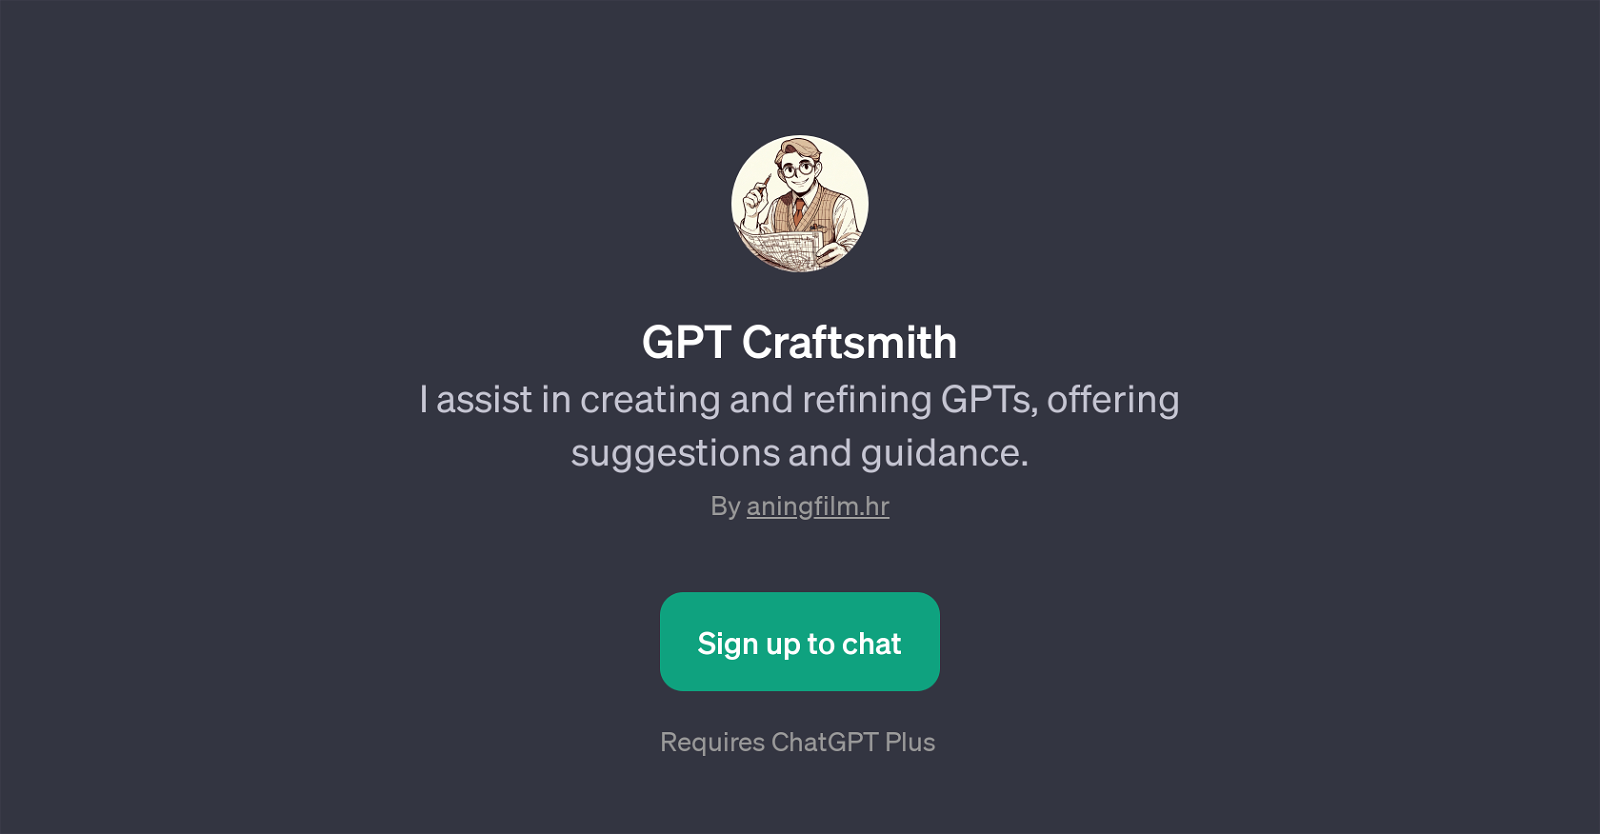 GPT Craftsmith website